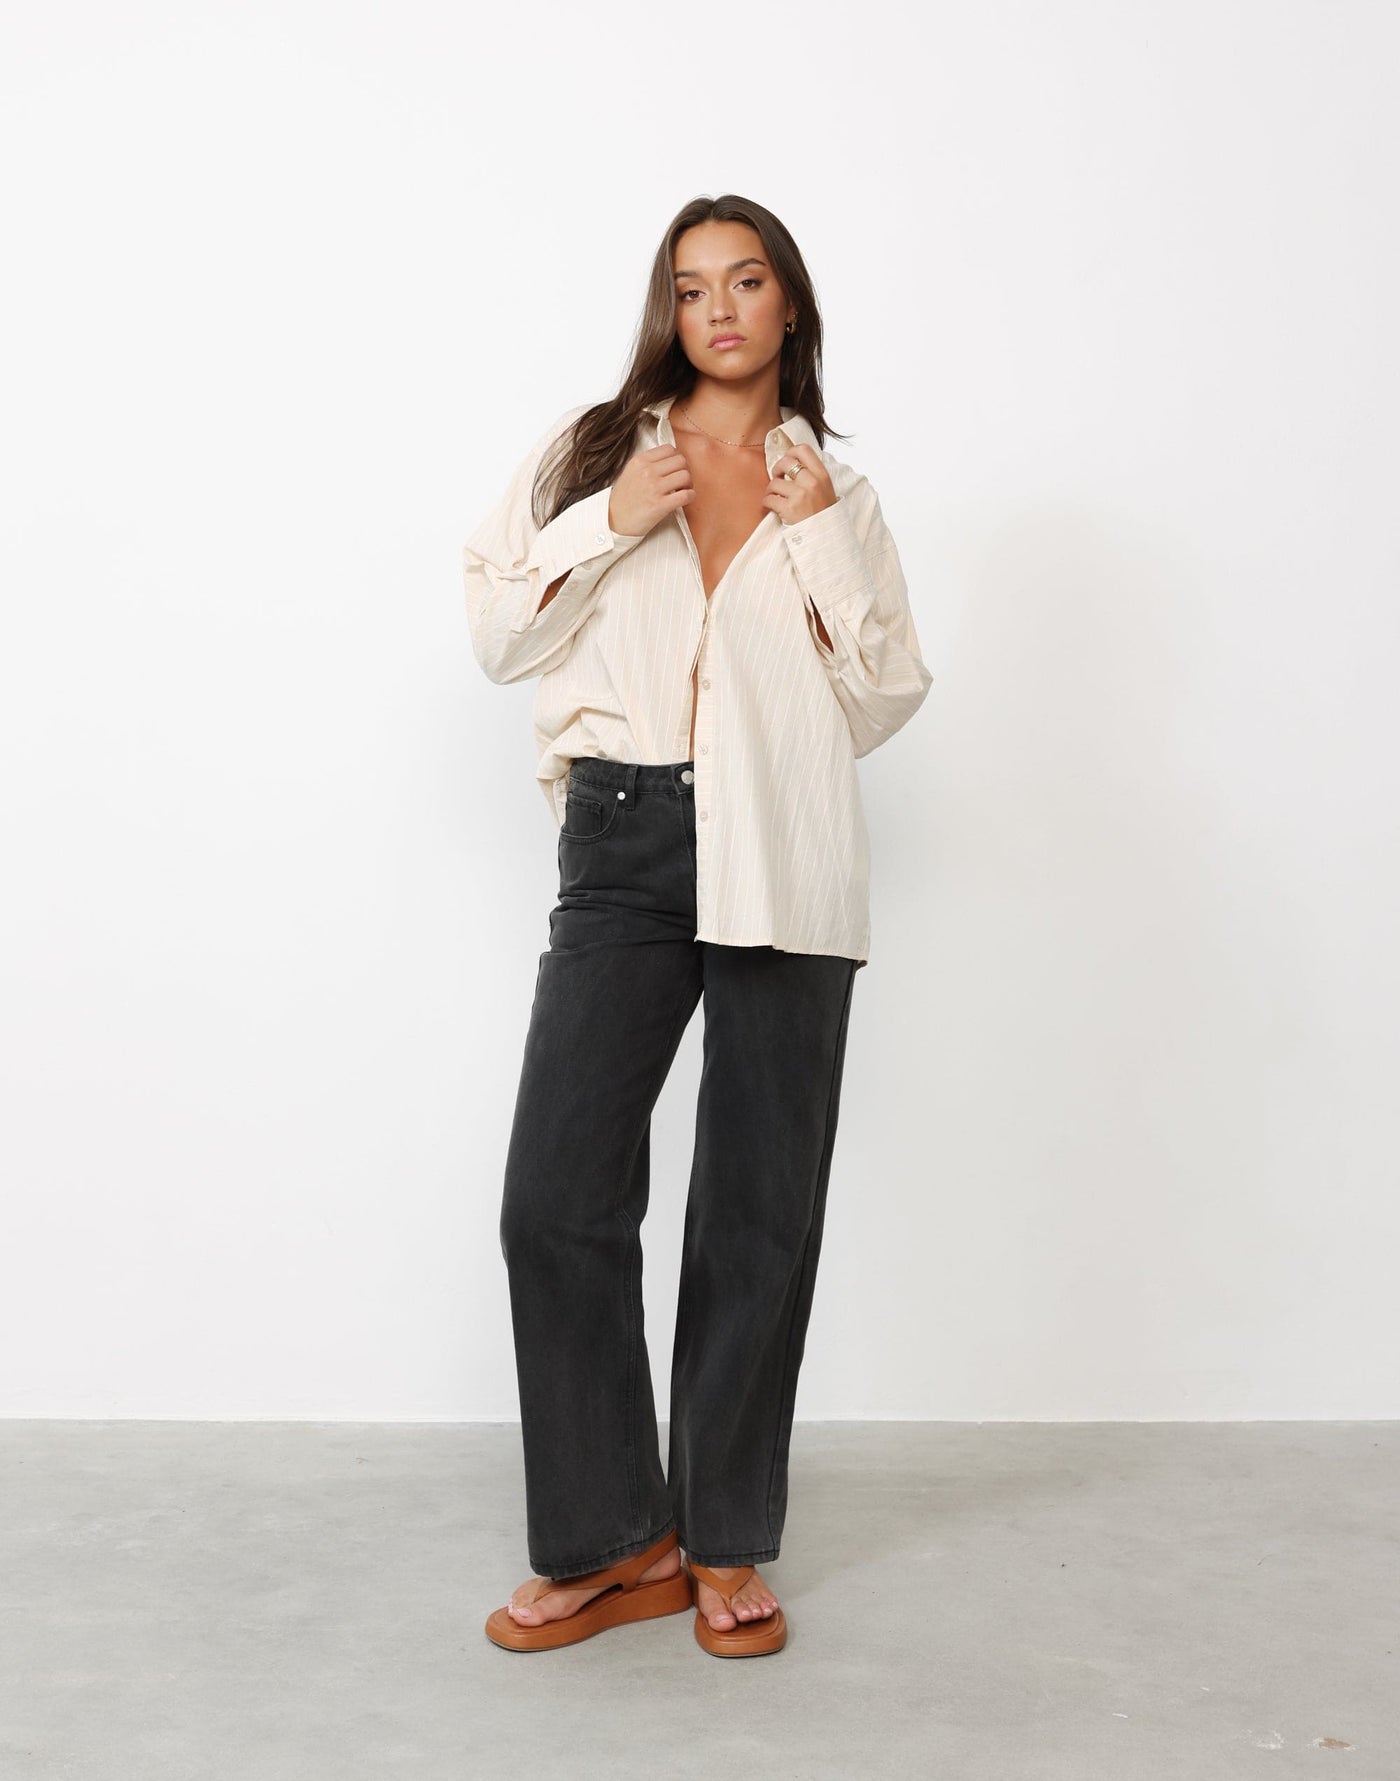 Blanchet Shirt (Almond Pinstripe) - Relaxed Fit Pinstripe Long Sleeve Dress Shirt - Women's Top - Charcoal Clothing